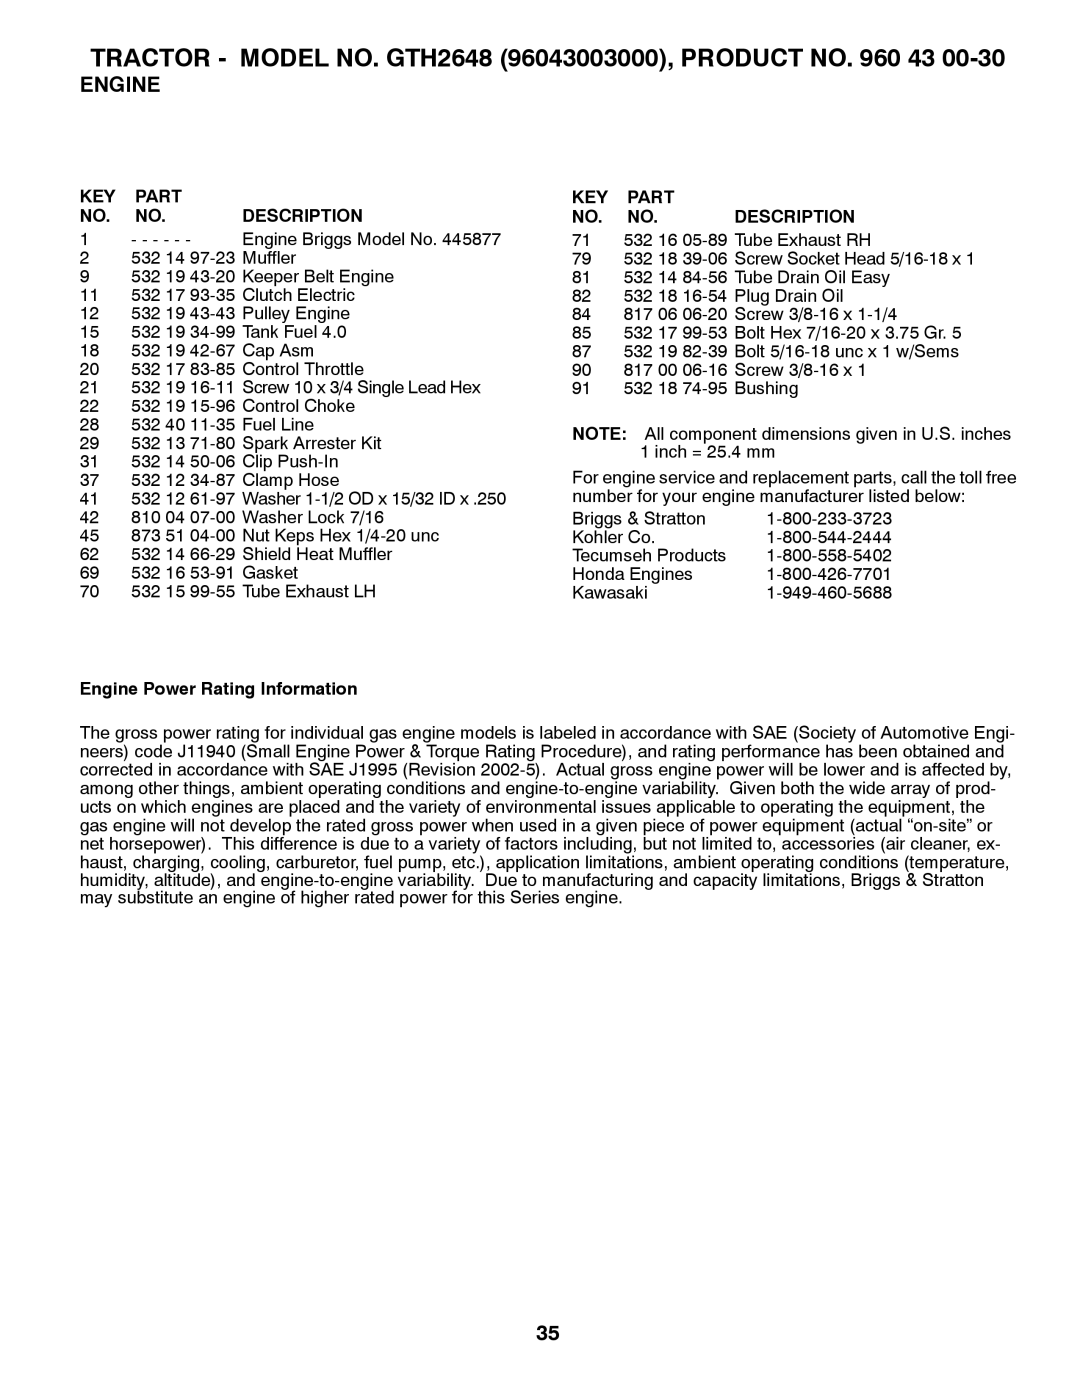 Husqvarna GTH2648 owner manual Key Part No. No. Description, Engine Power Rating Information 